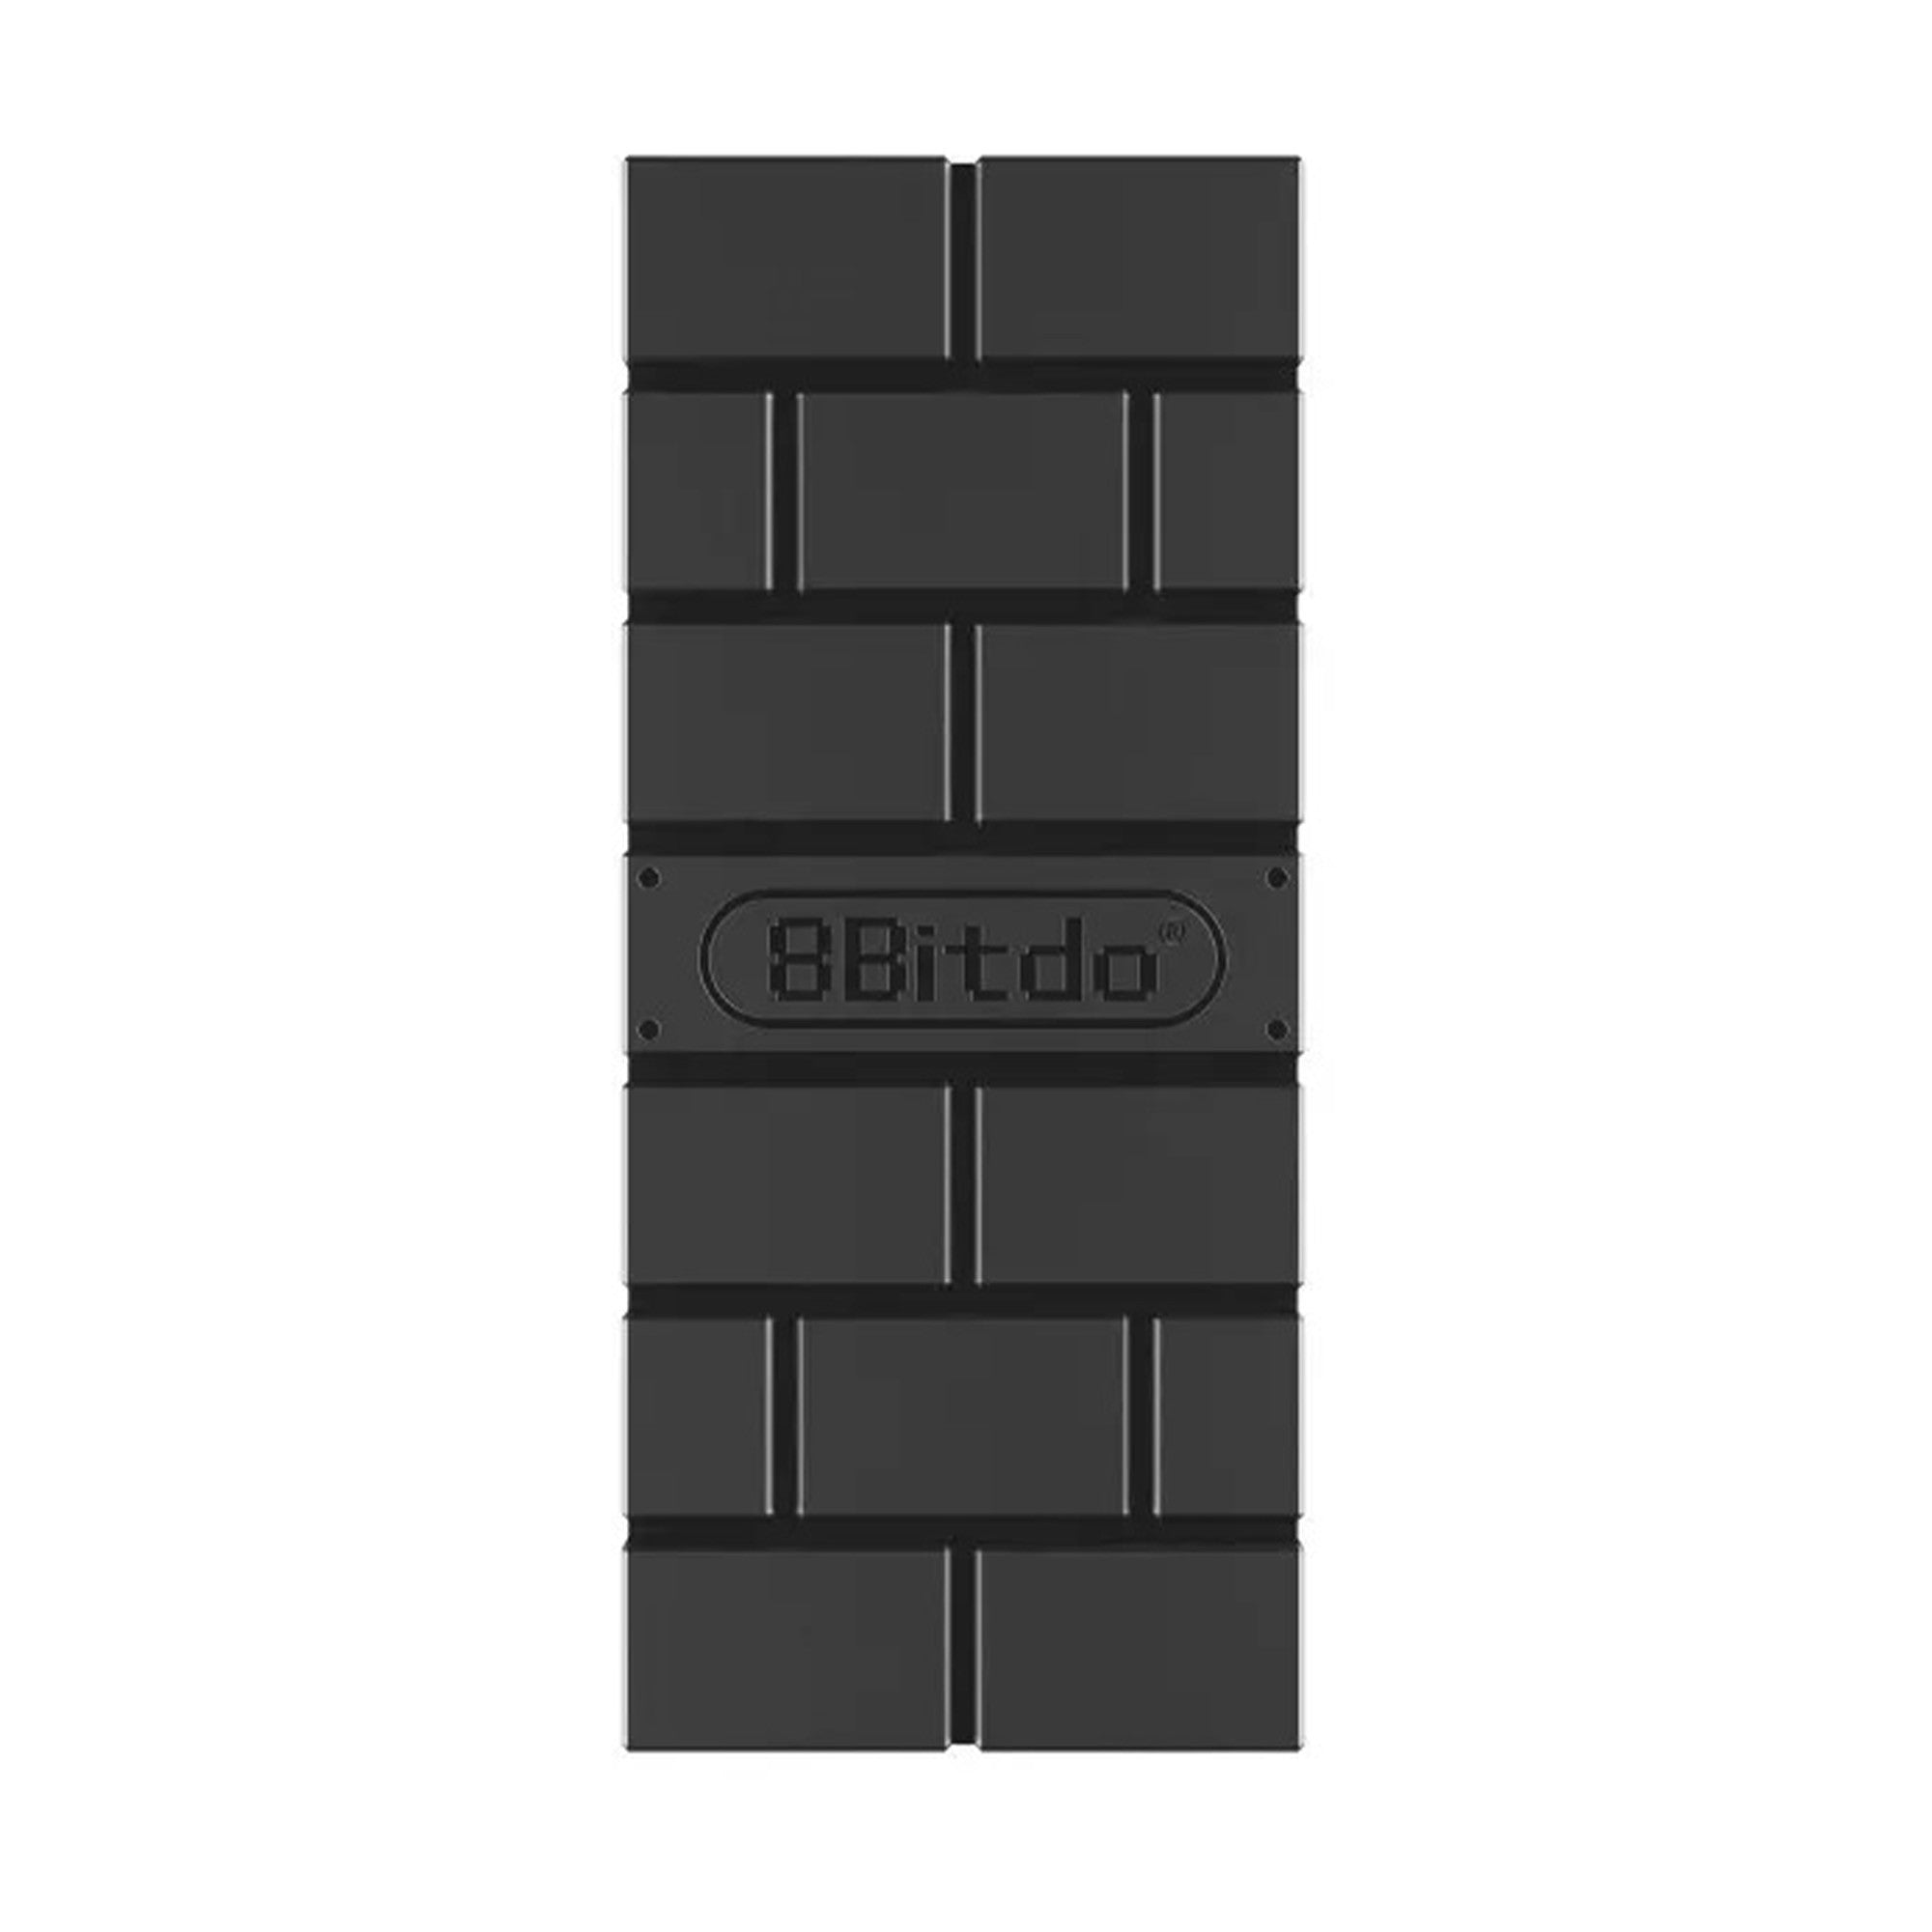 8BitDo USB Wireless Adapter 2 - 15-11982